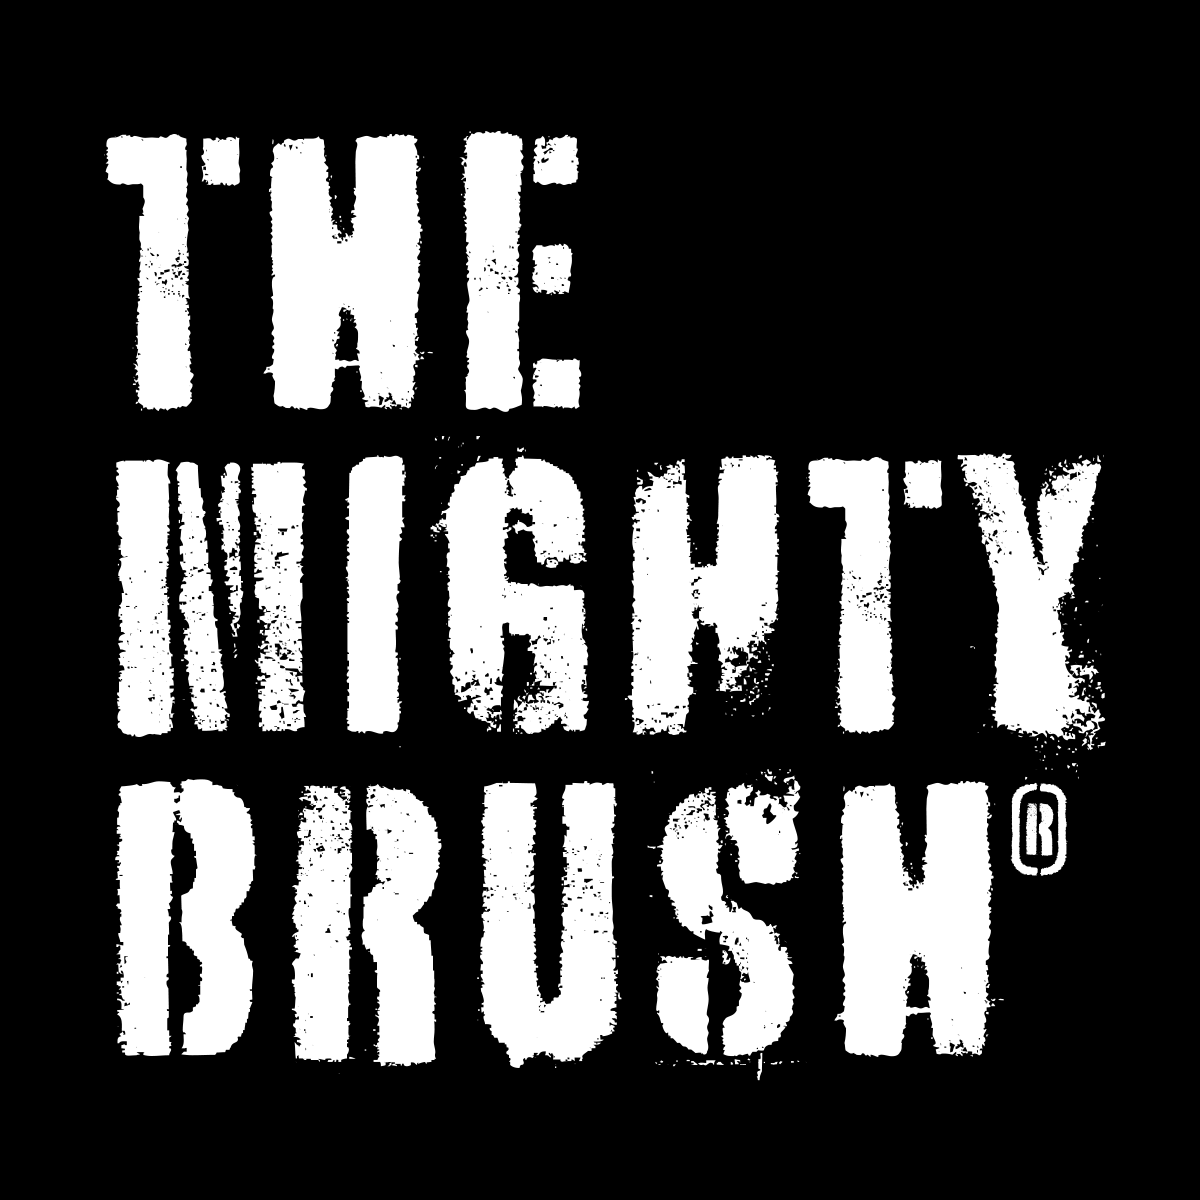 www.themightybrush.com